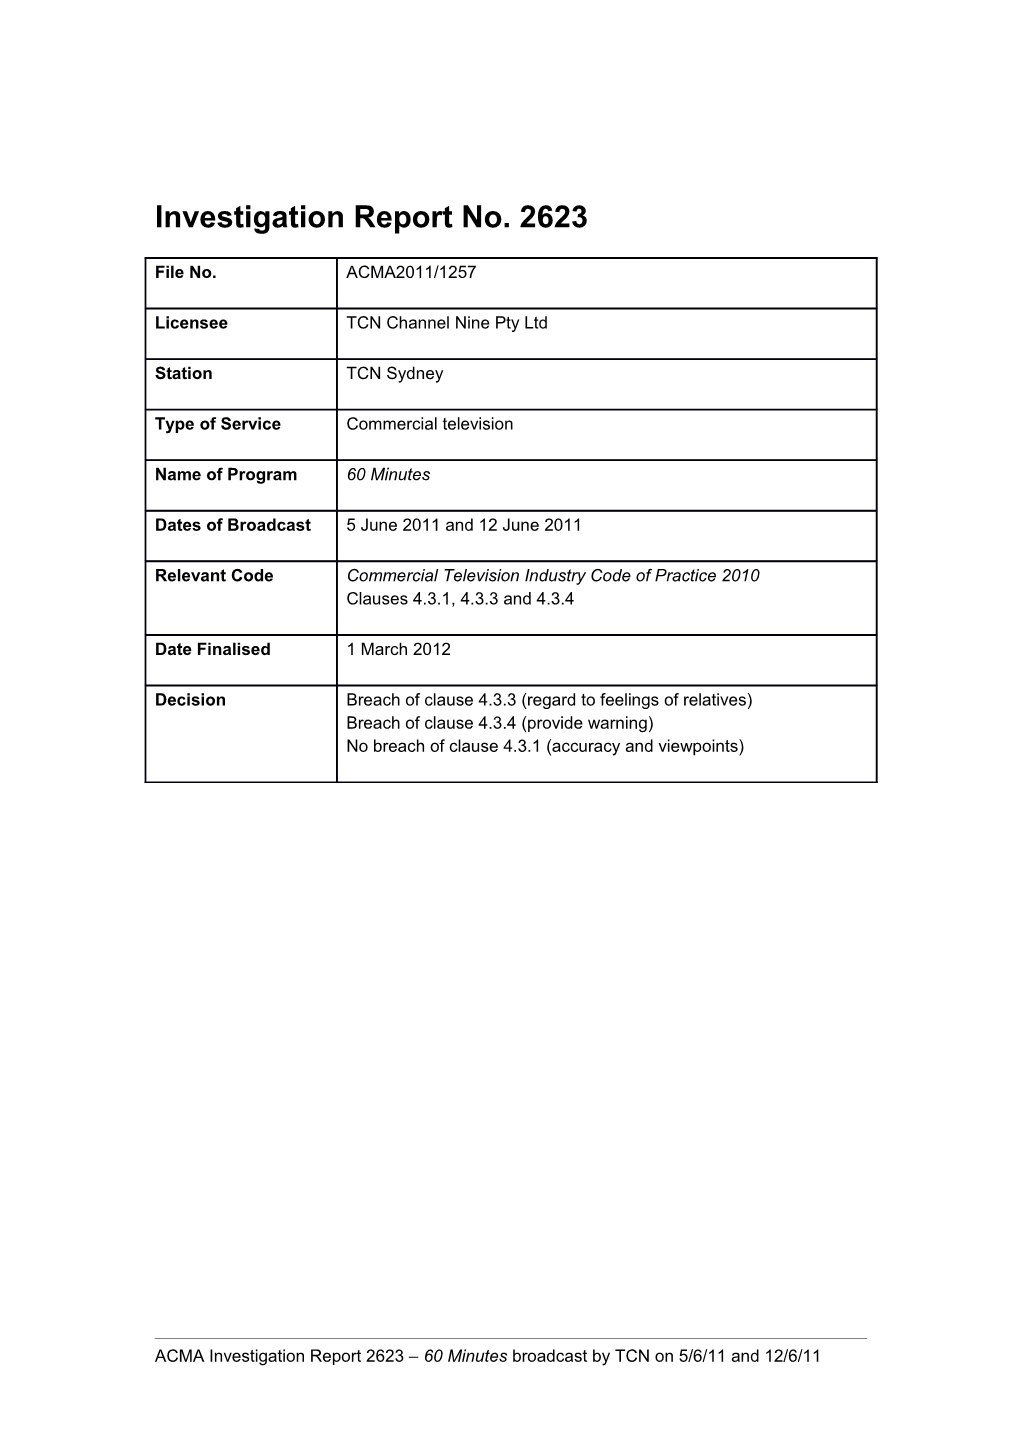 TCN Sydney - ACMA Investigation Report 2623